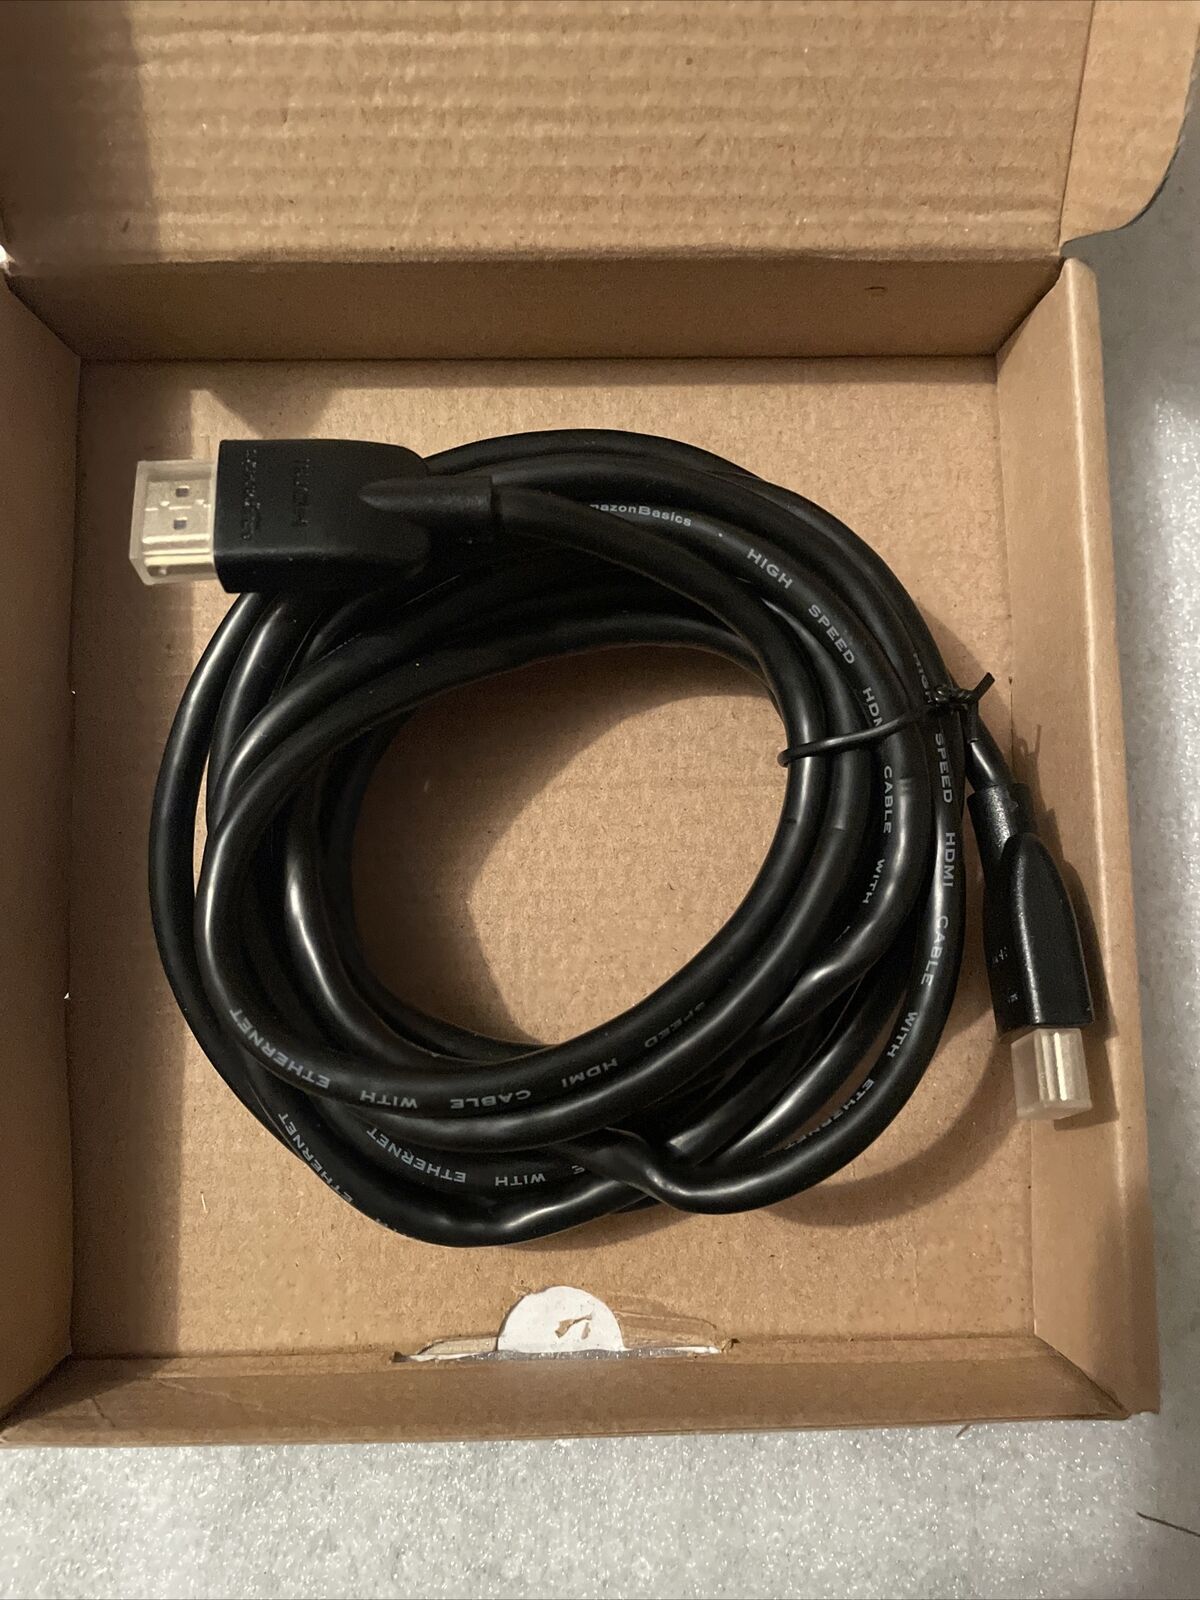 Amazon Basics HDMI Cable Cord, 10-Ft Black